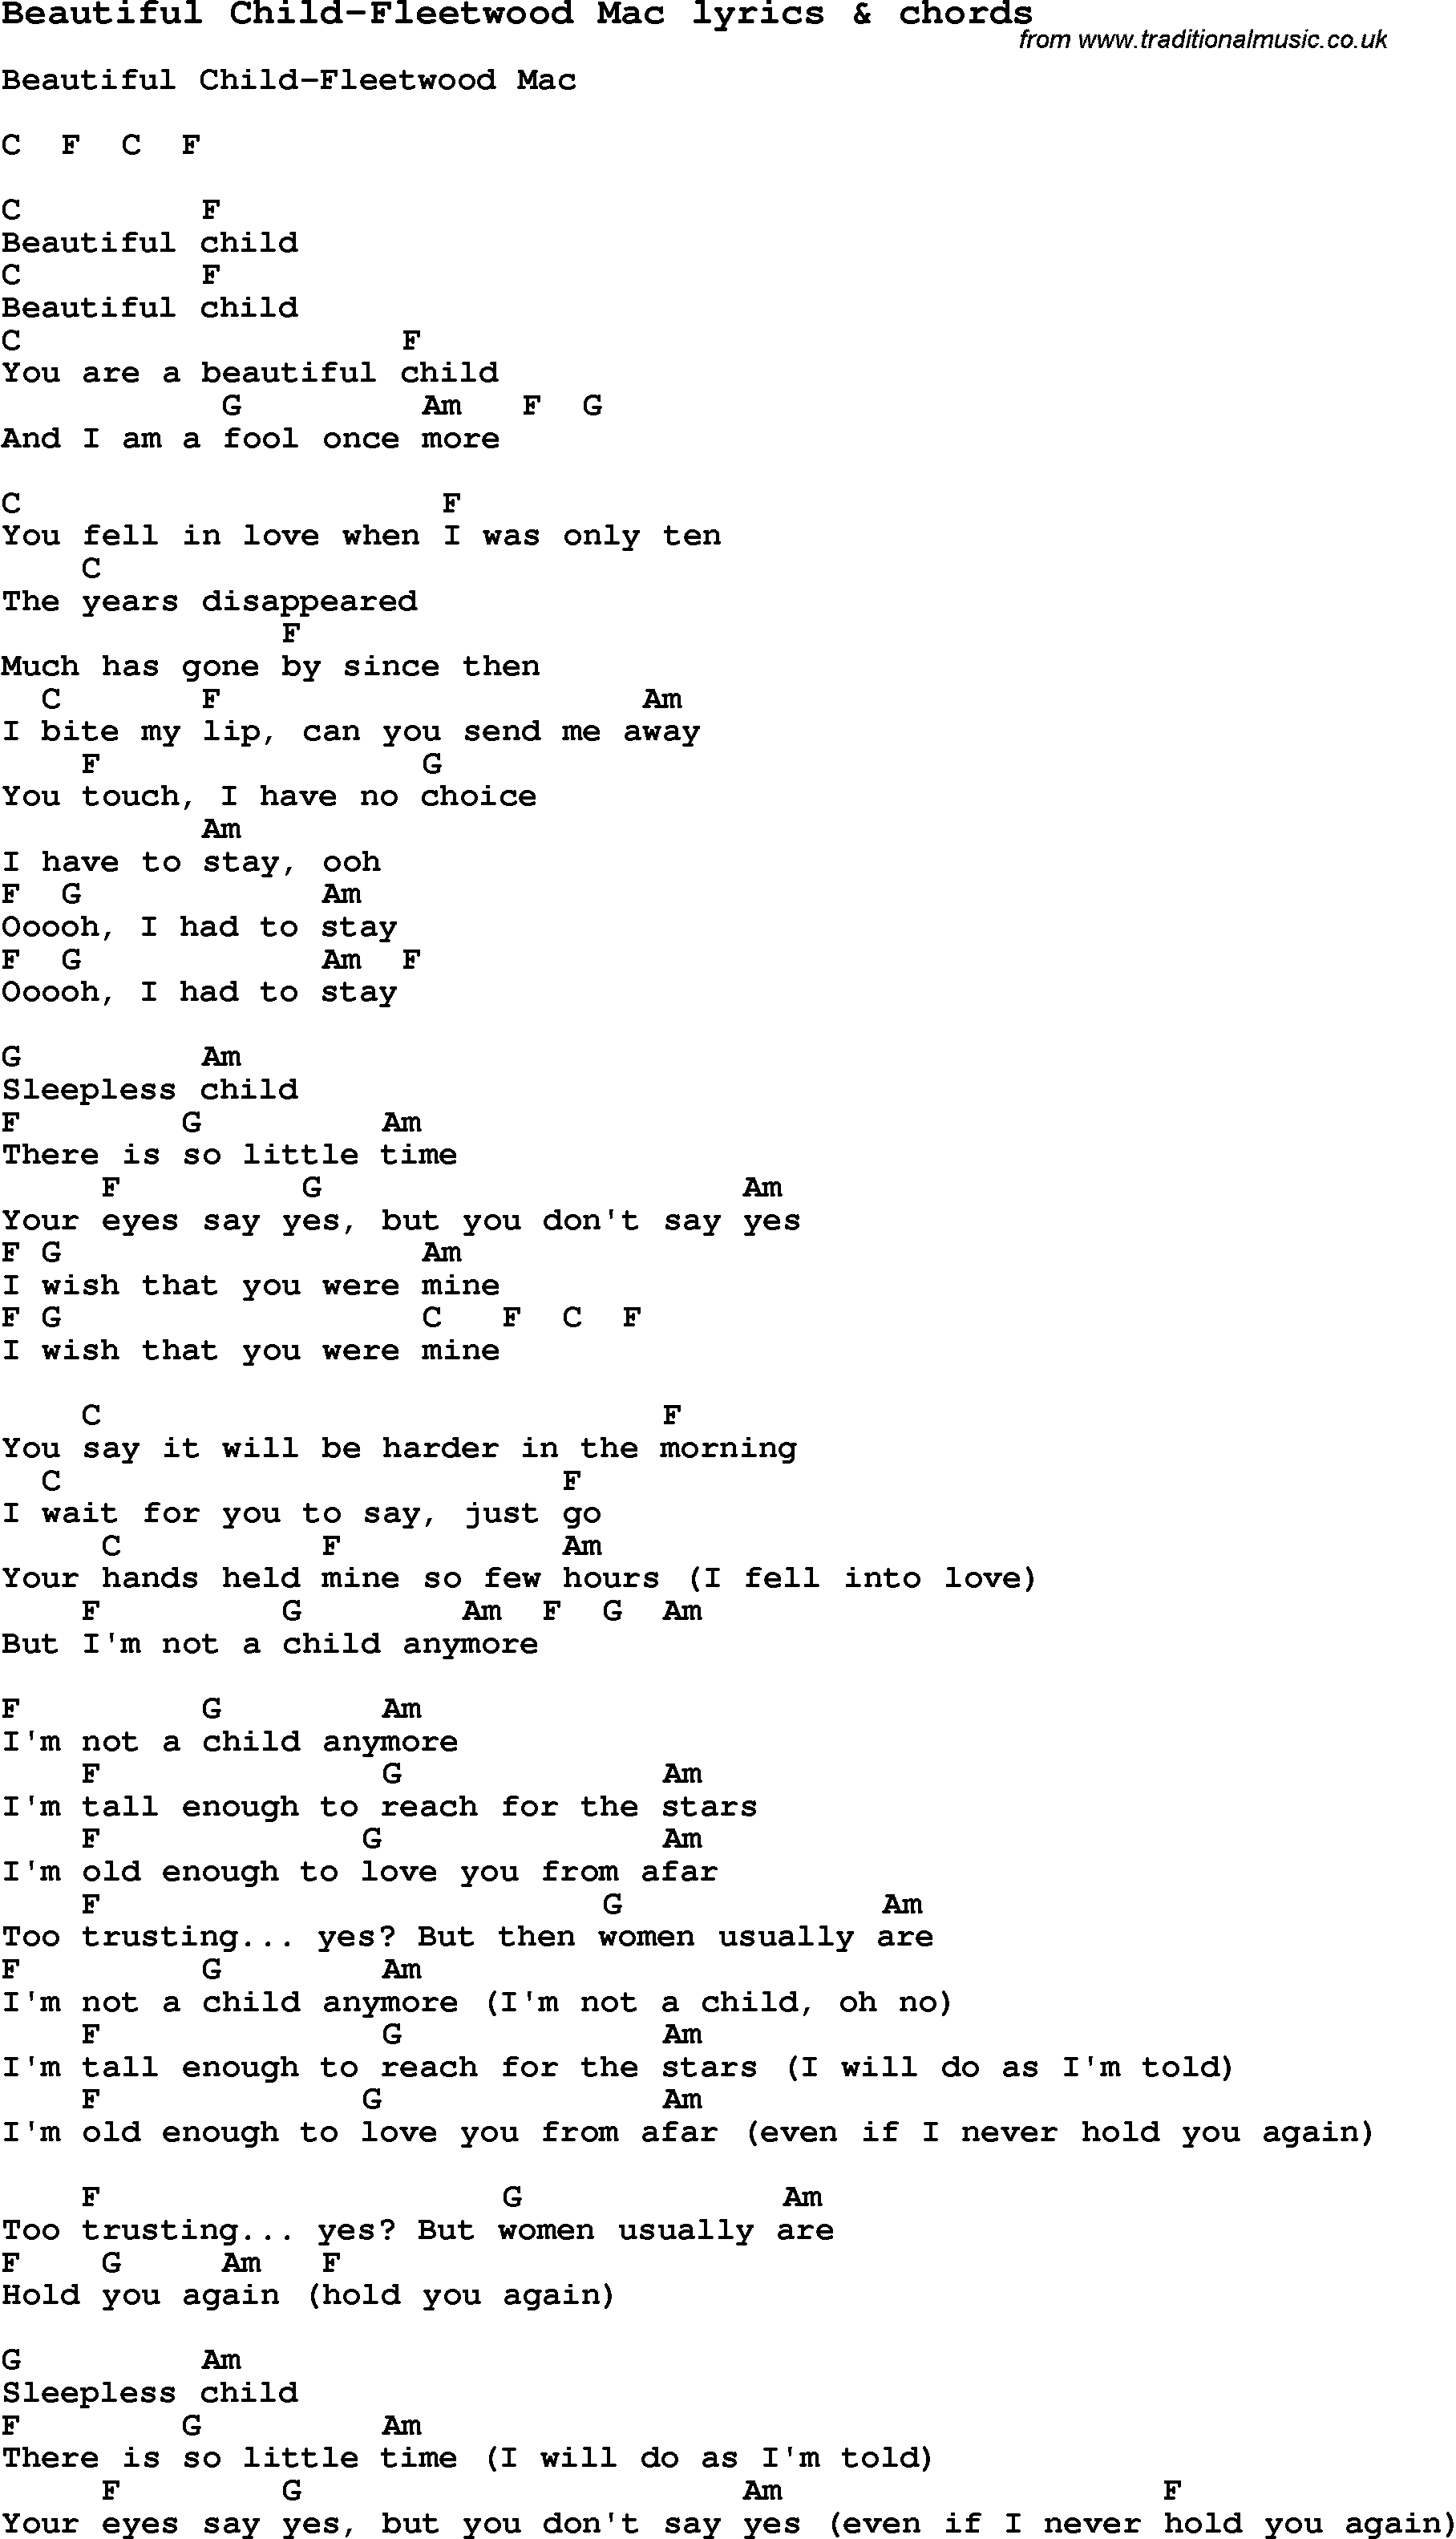 Love Song Lyrics for: Beautiful Child-Fleetwood Mac with chords for Ukulele, Guitar Banjo etc.